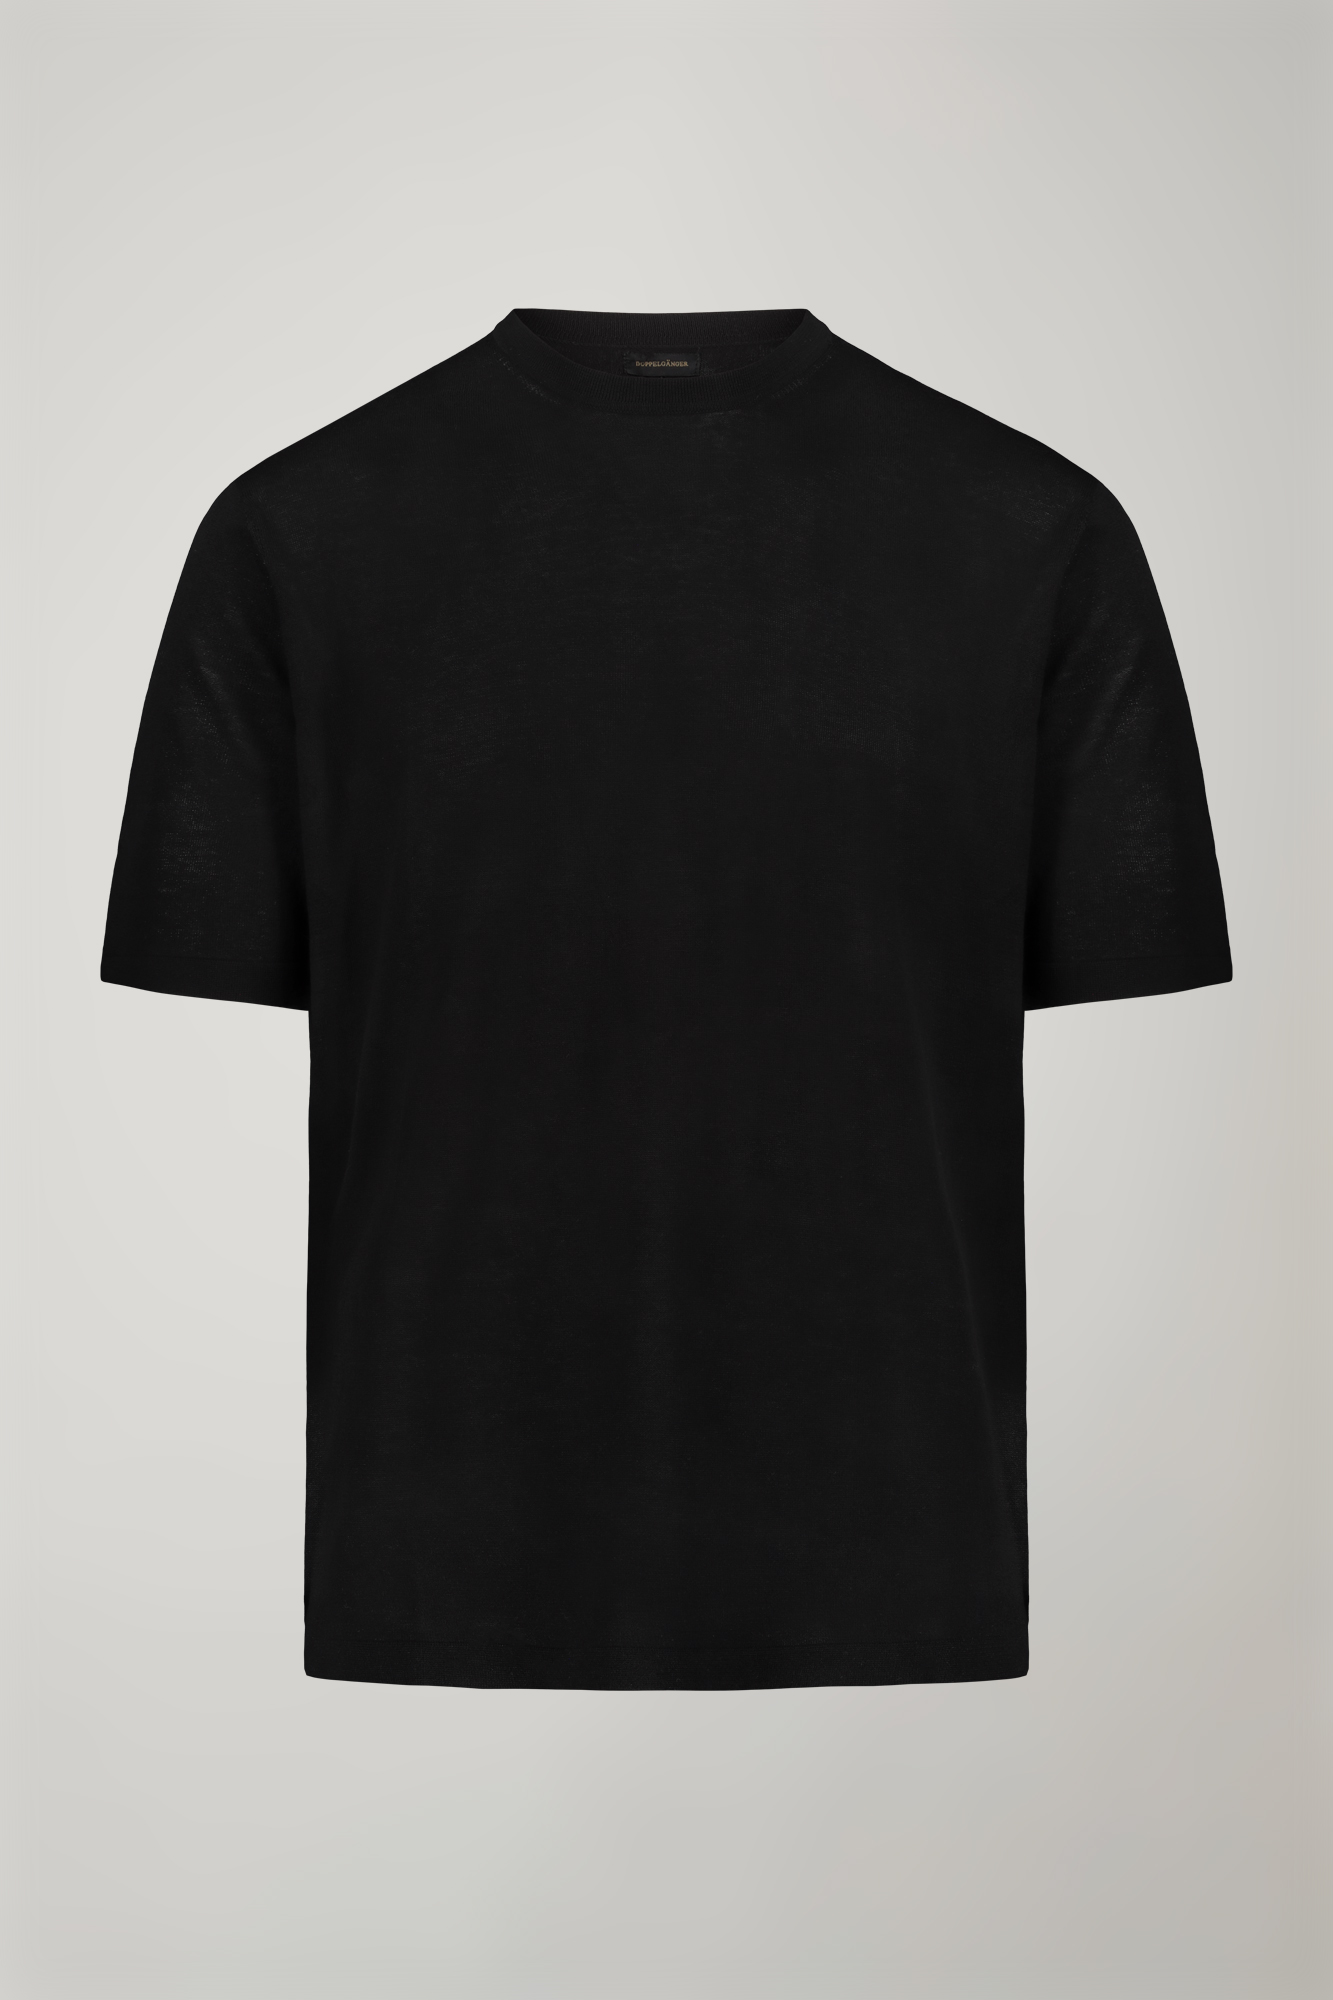 Men's knitted t-shirt 100% cotton short-sleeved regular fit image number null